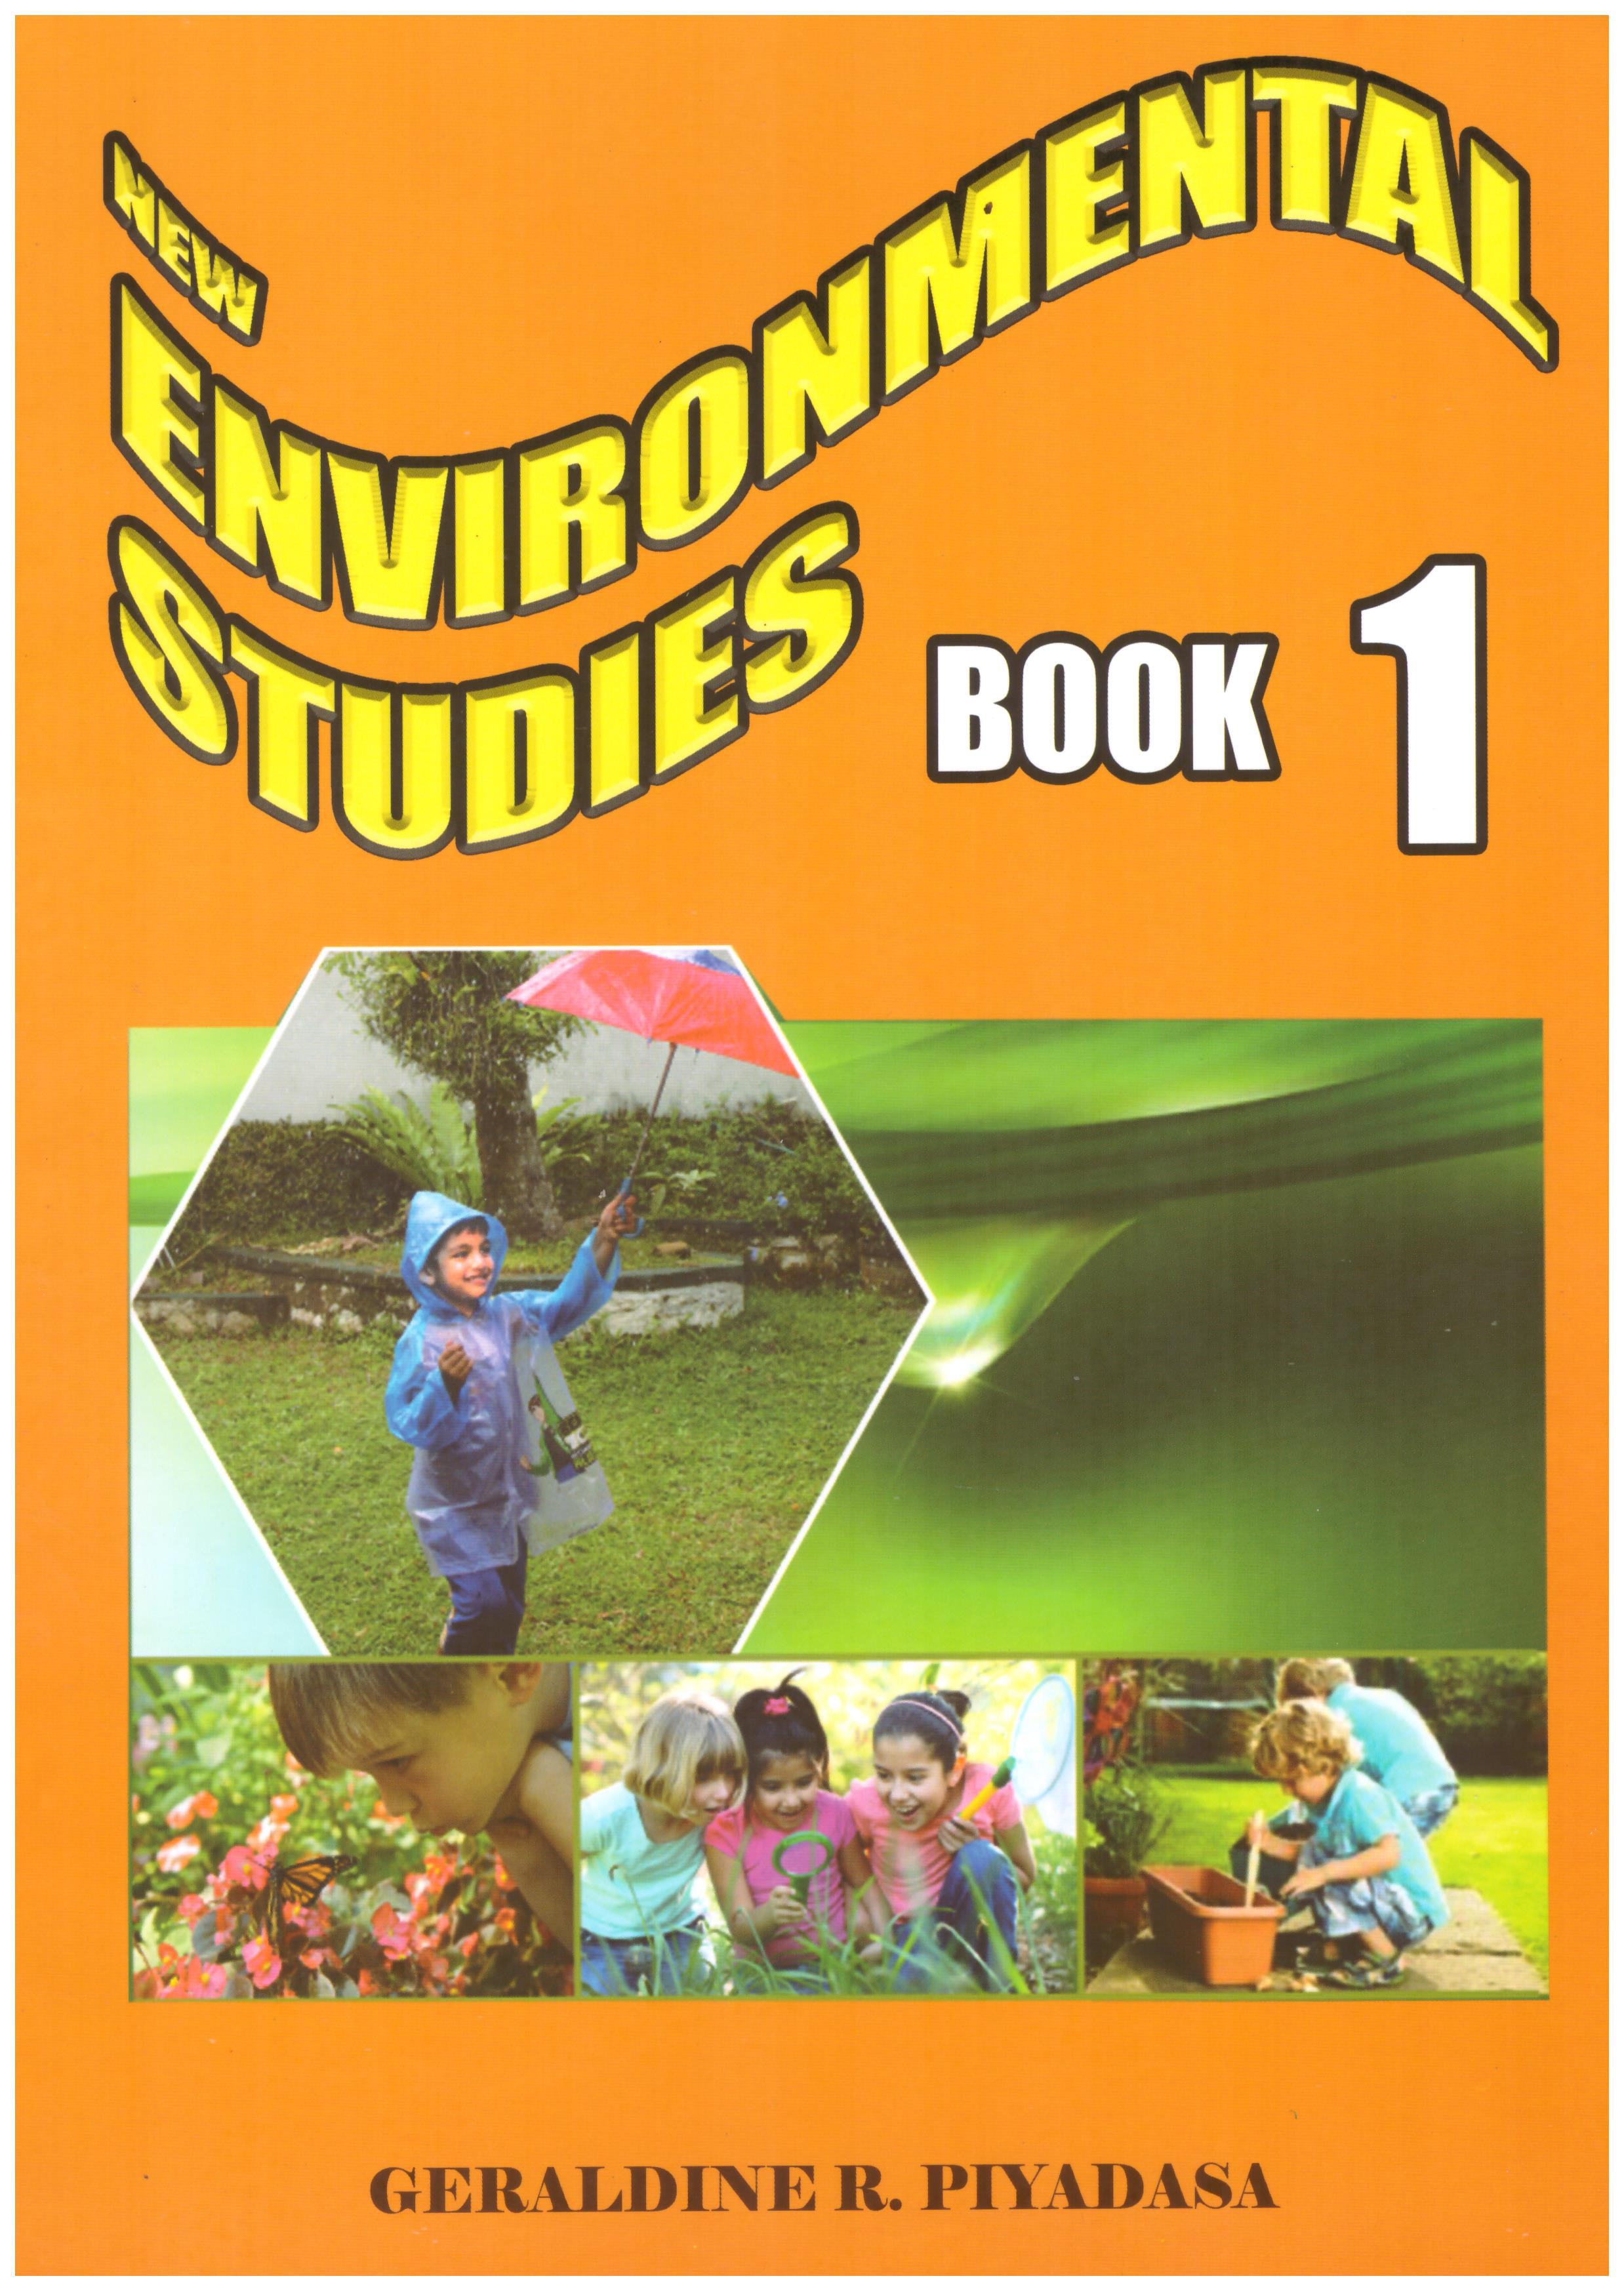 New Environmental Studies Book 1 - n/a - 9789553856845